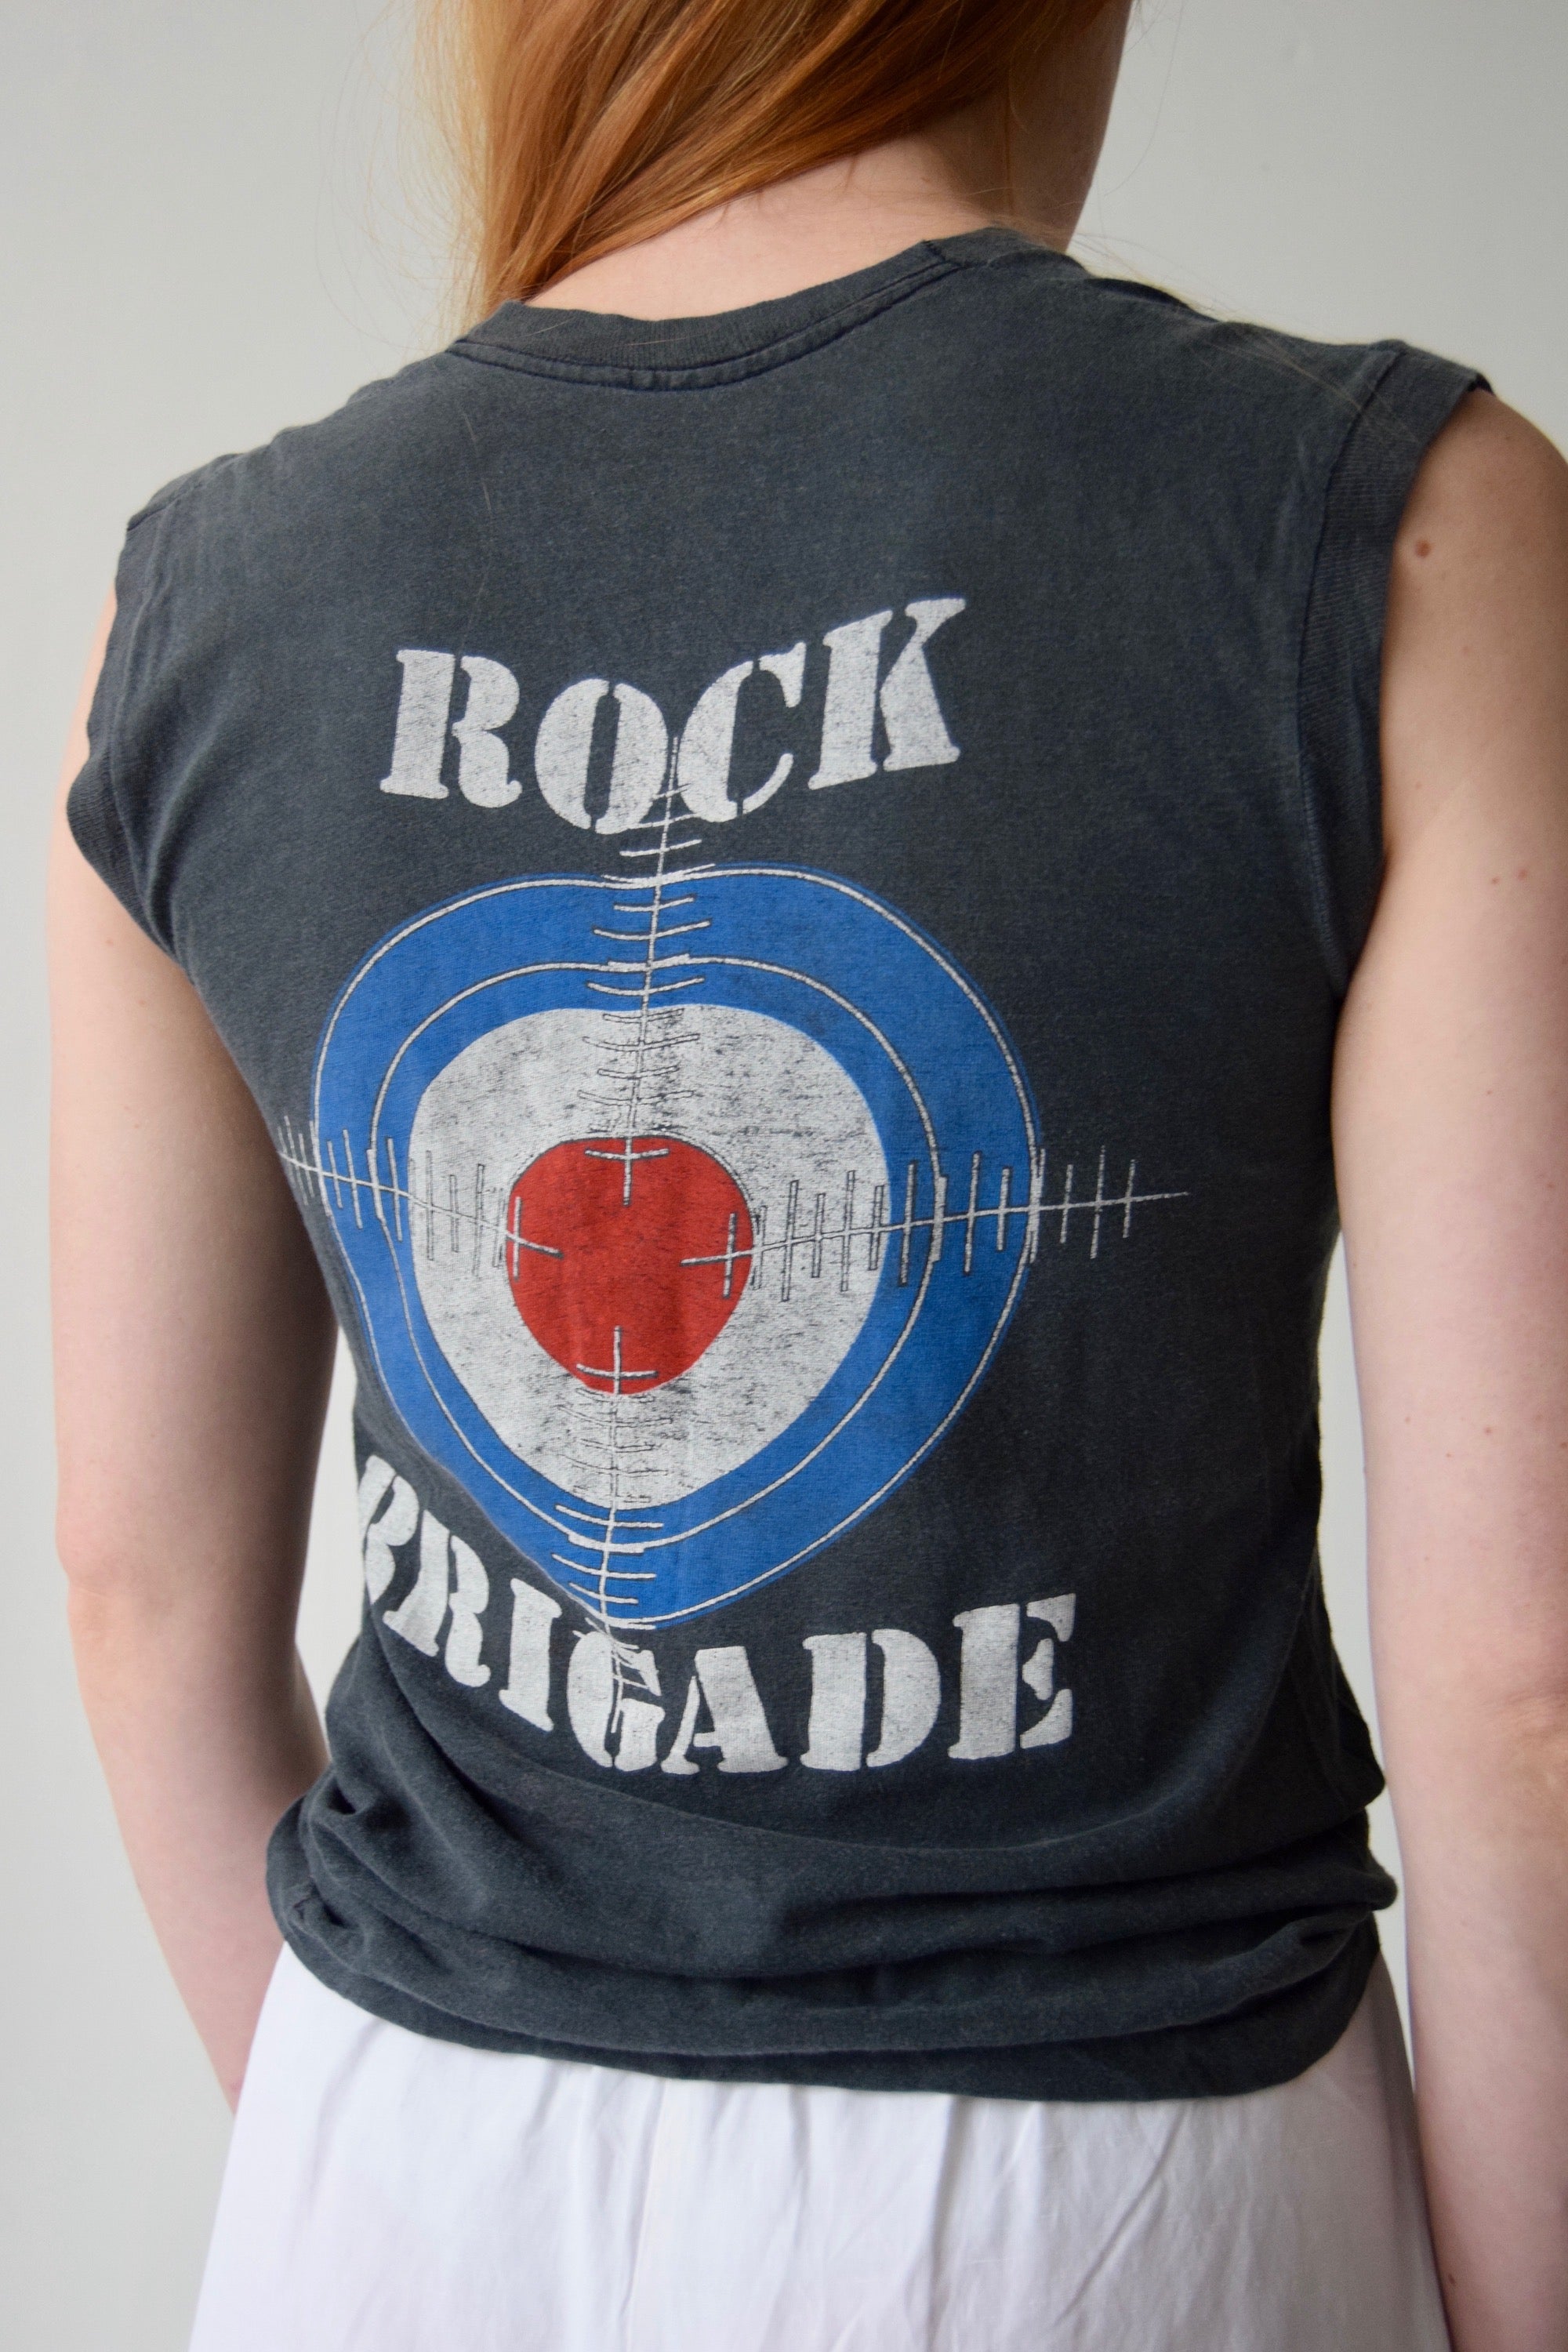 def leppard rock brigade t shirt